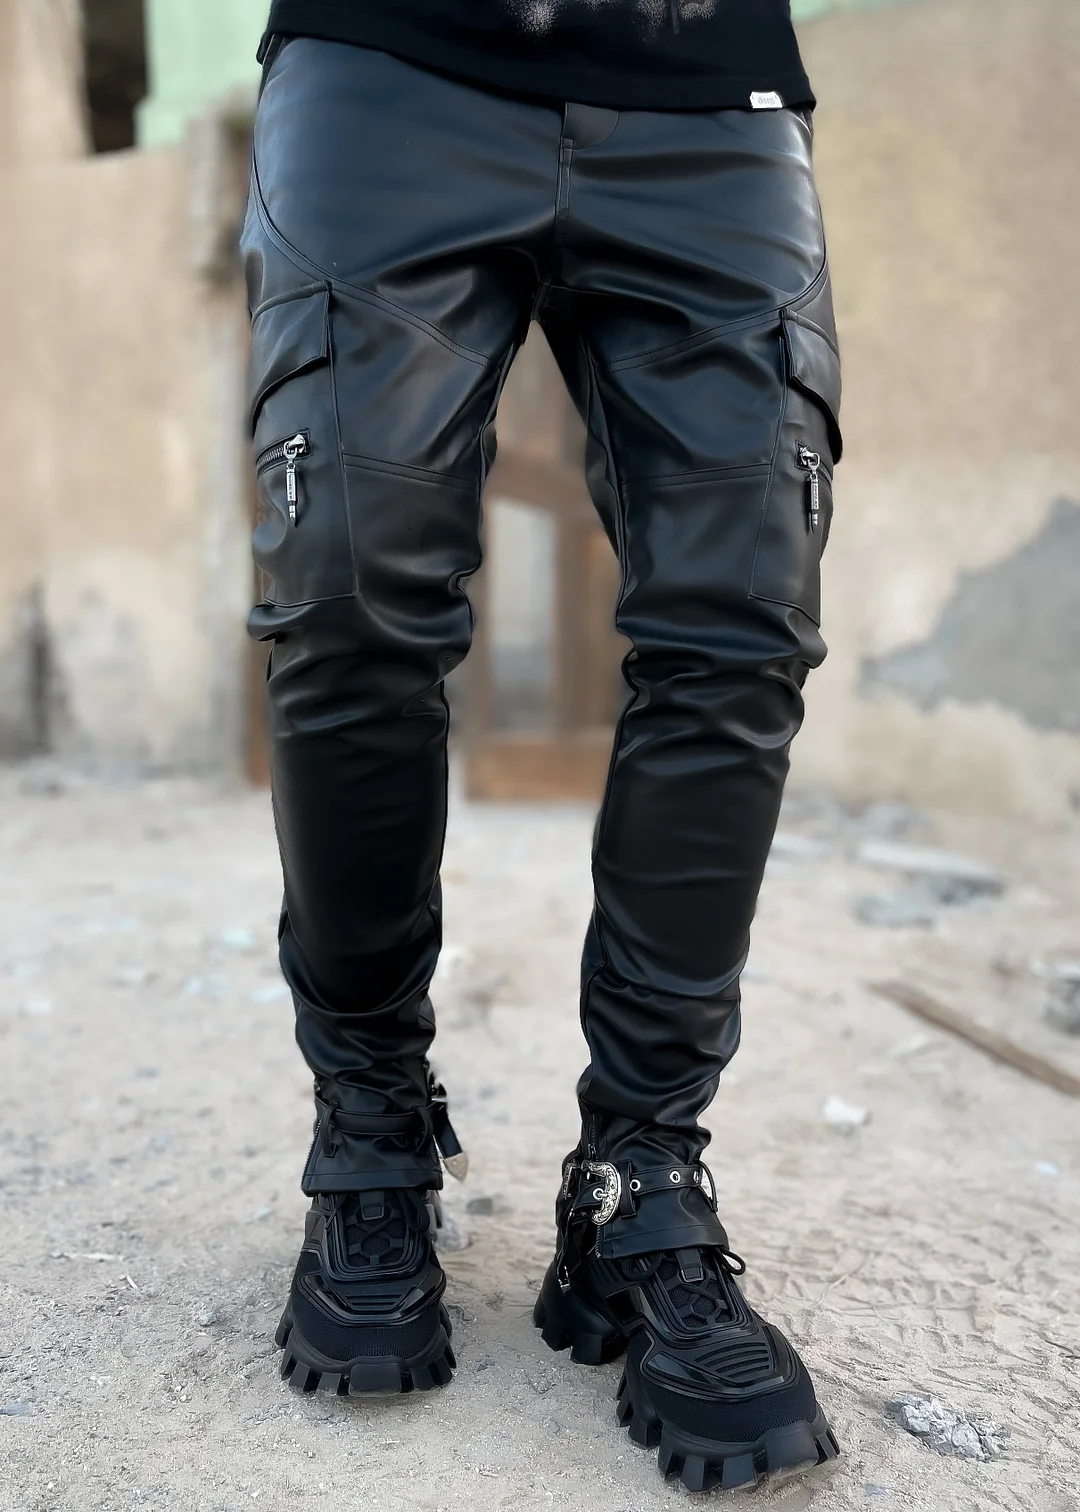 Obsidian Black Dead Or Alive Leather Pant